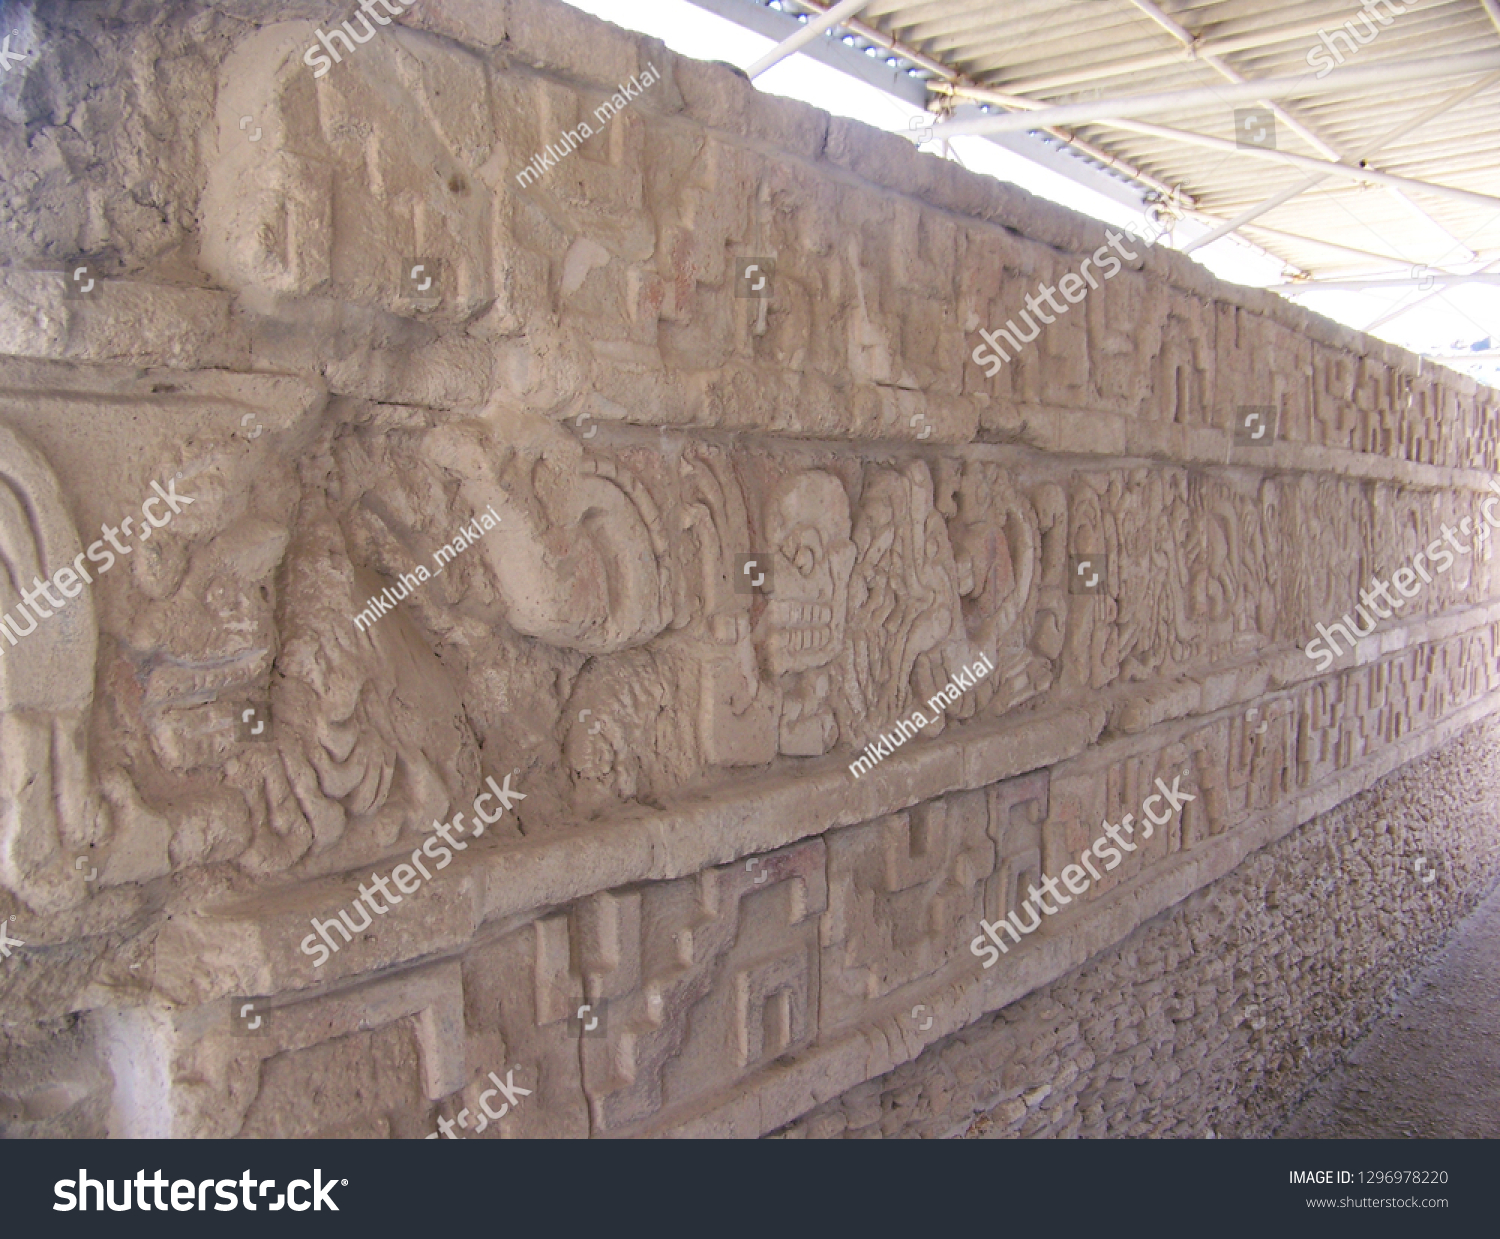 Tula, Mexico, November 28, 2016. Bas-relief at Tula Archaeological Site, Mexico on November 28, 2016. #1296978220